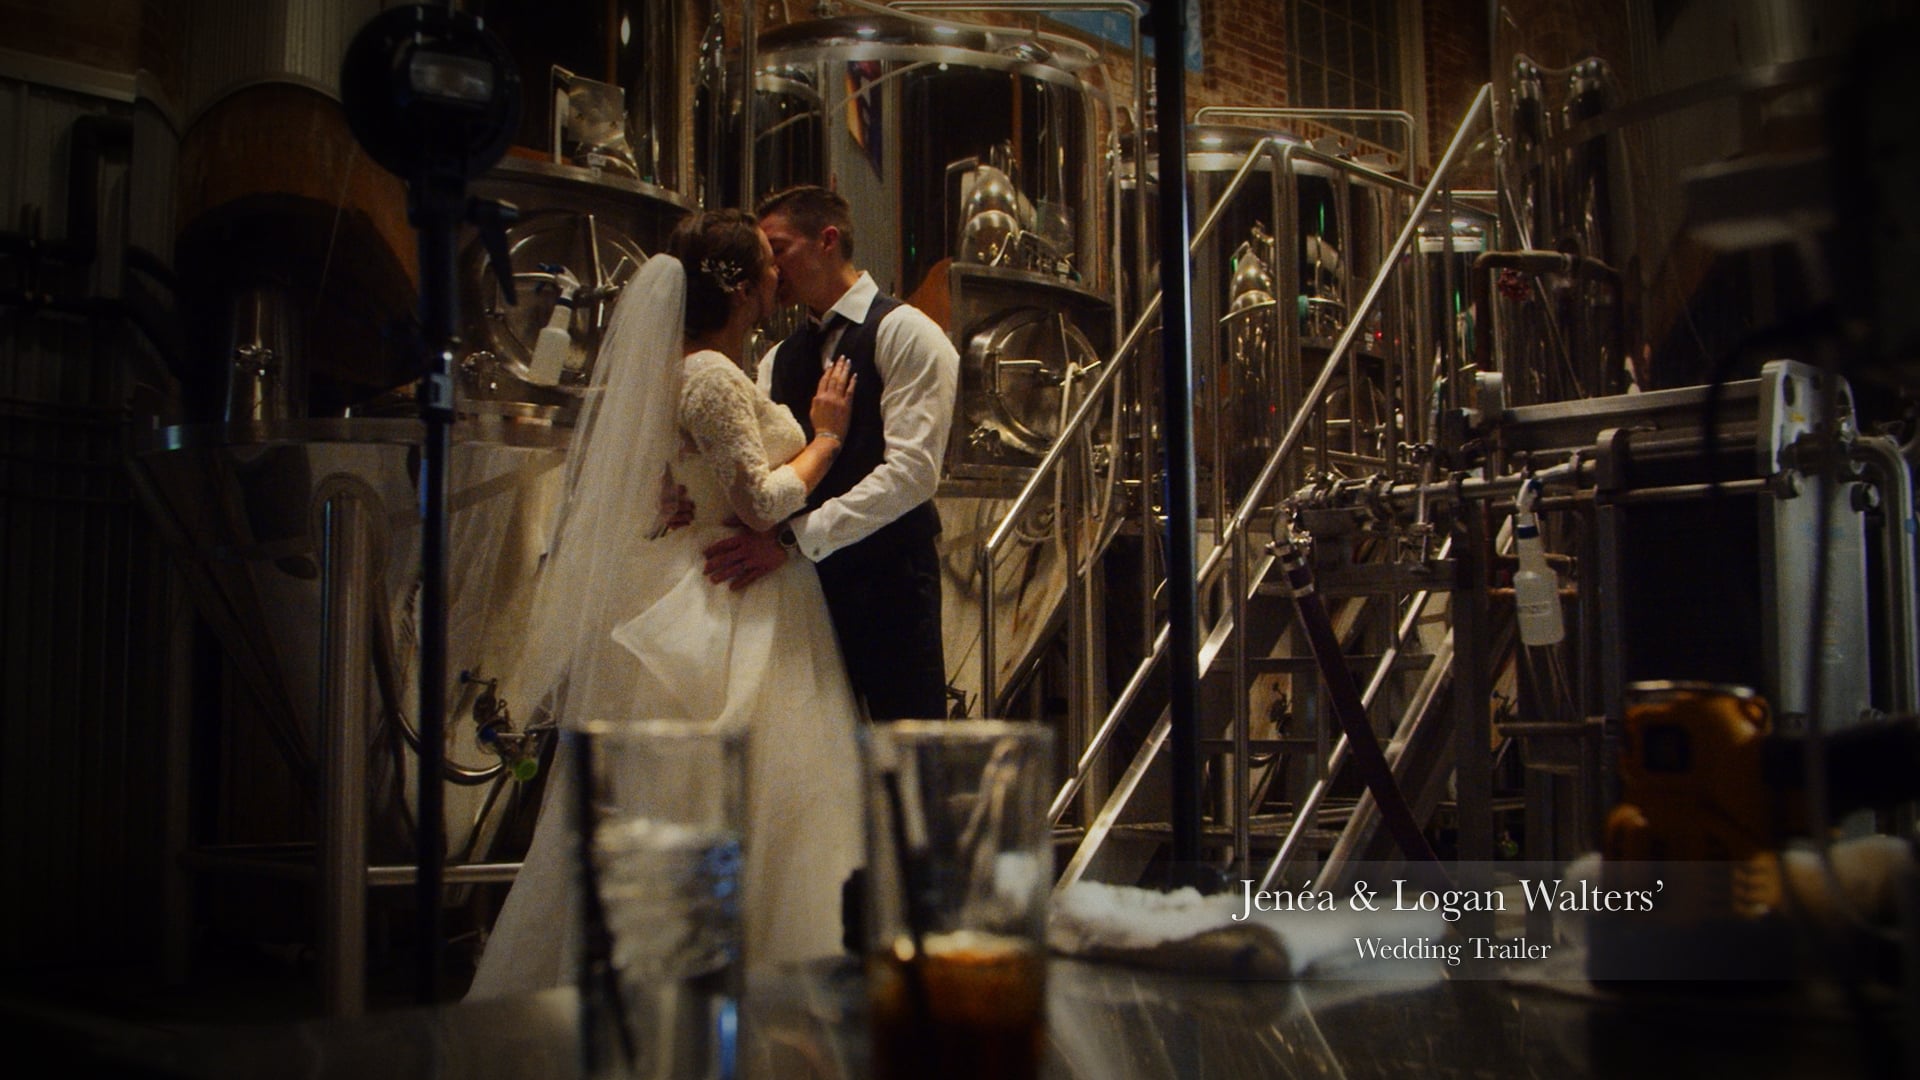 Jenéa & Logan's Wedding Trailer